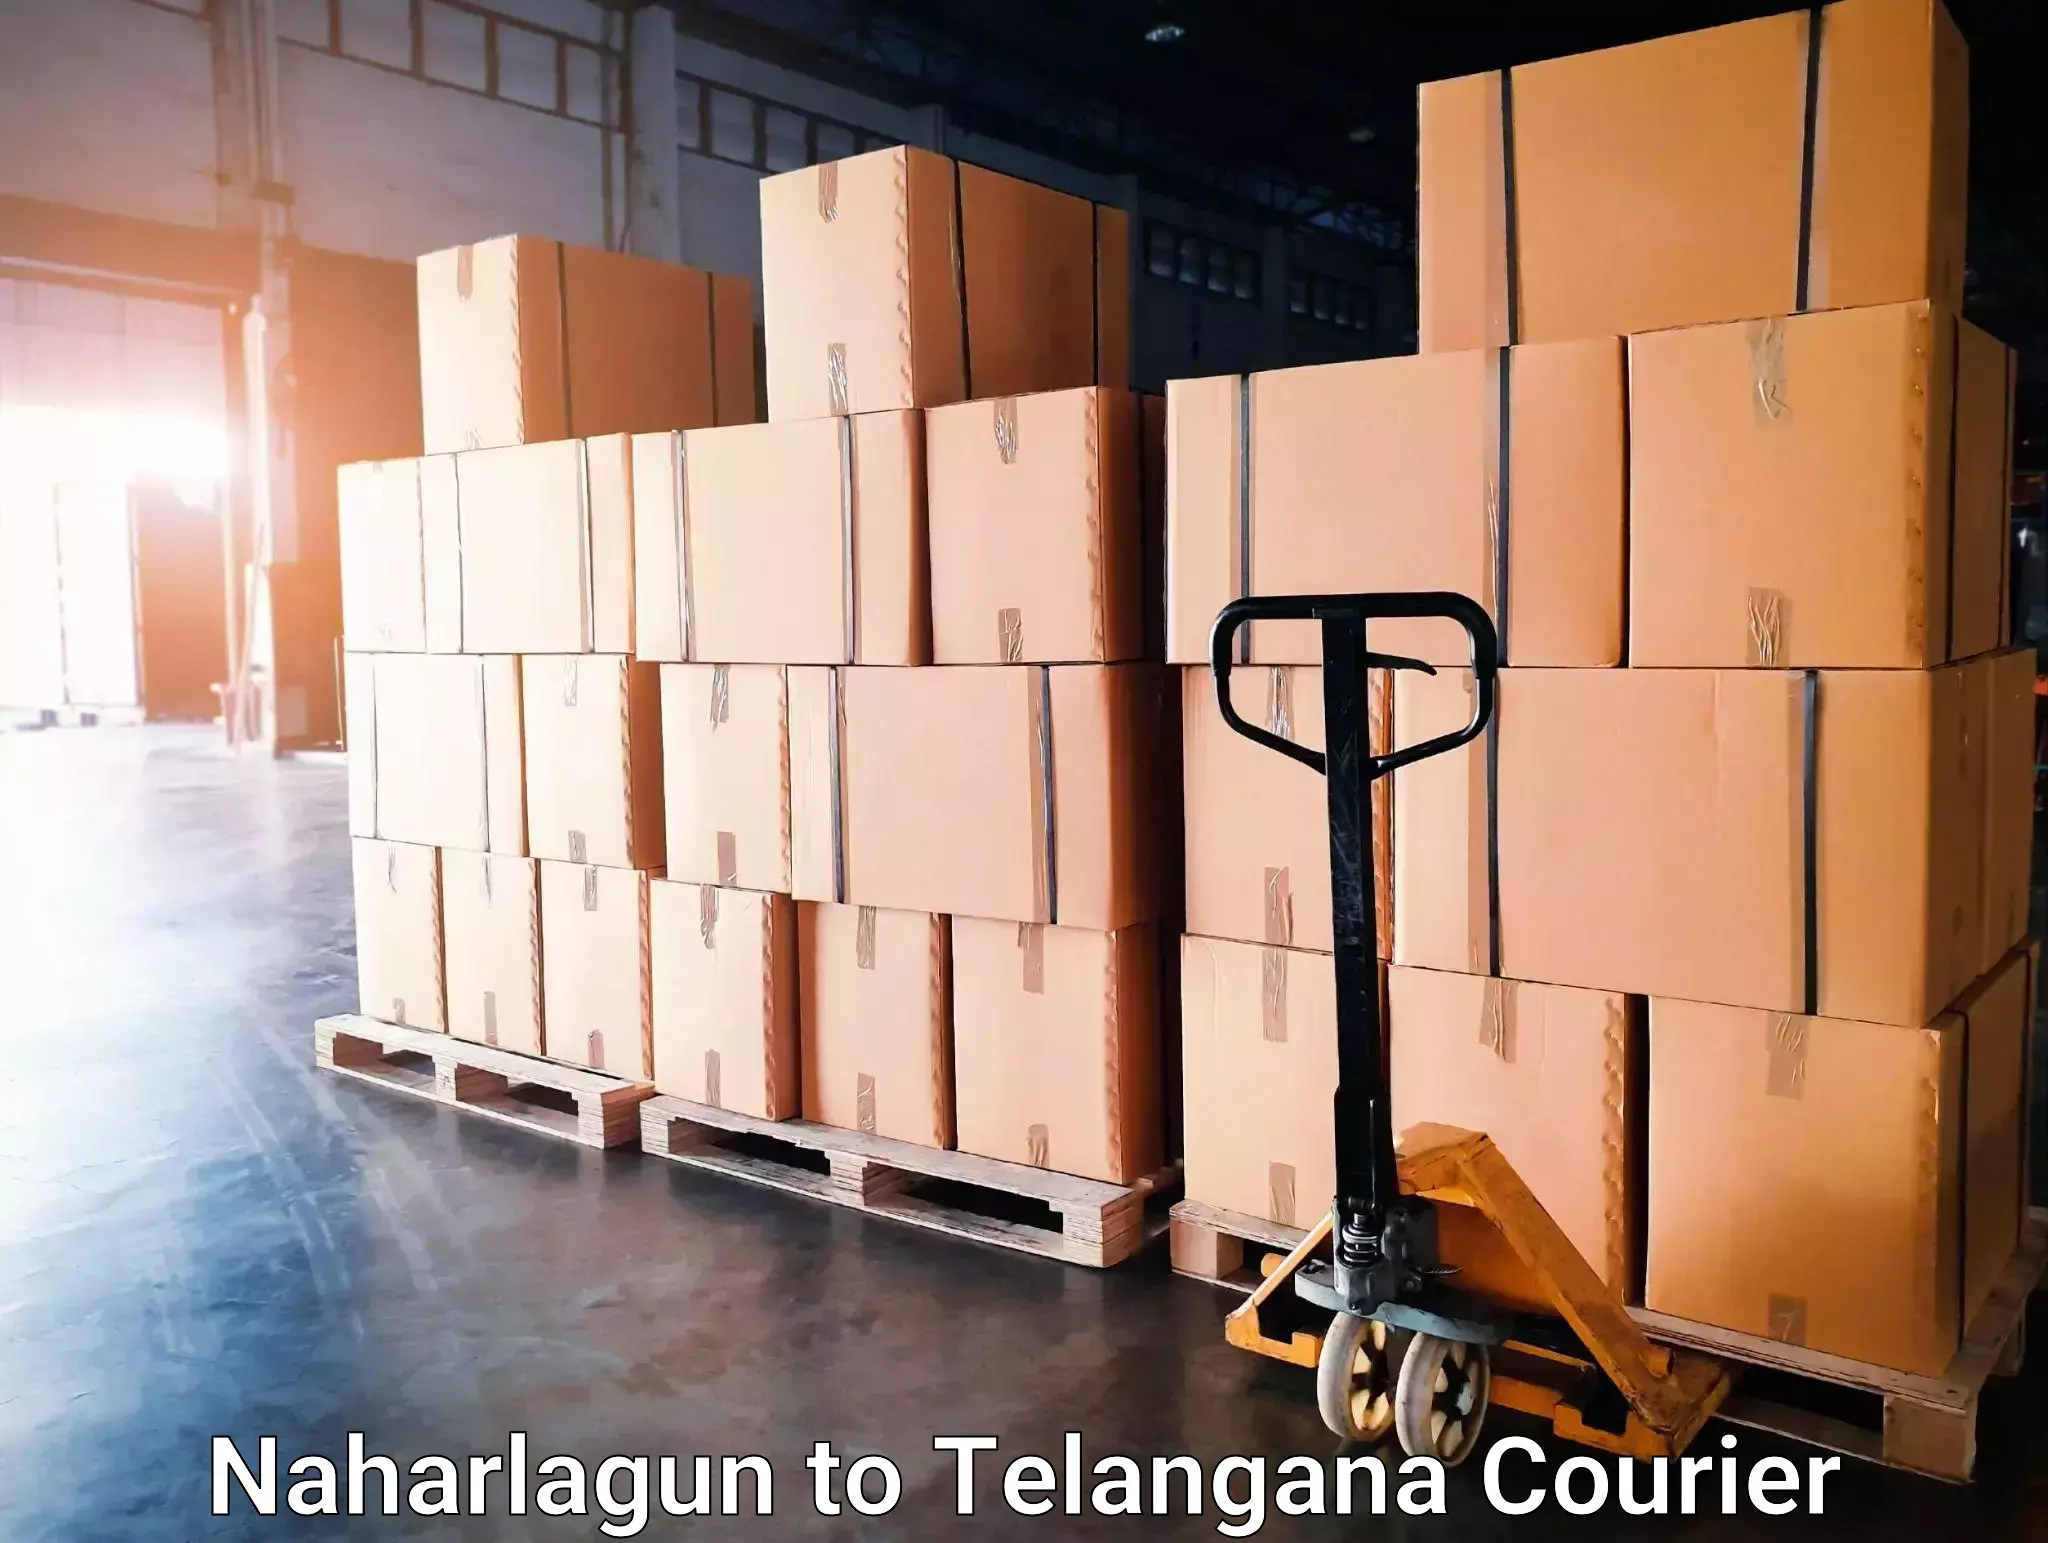 Nationwide delivery network Naharlagun to Gangadhara